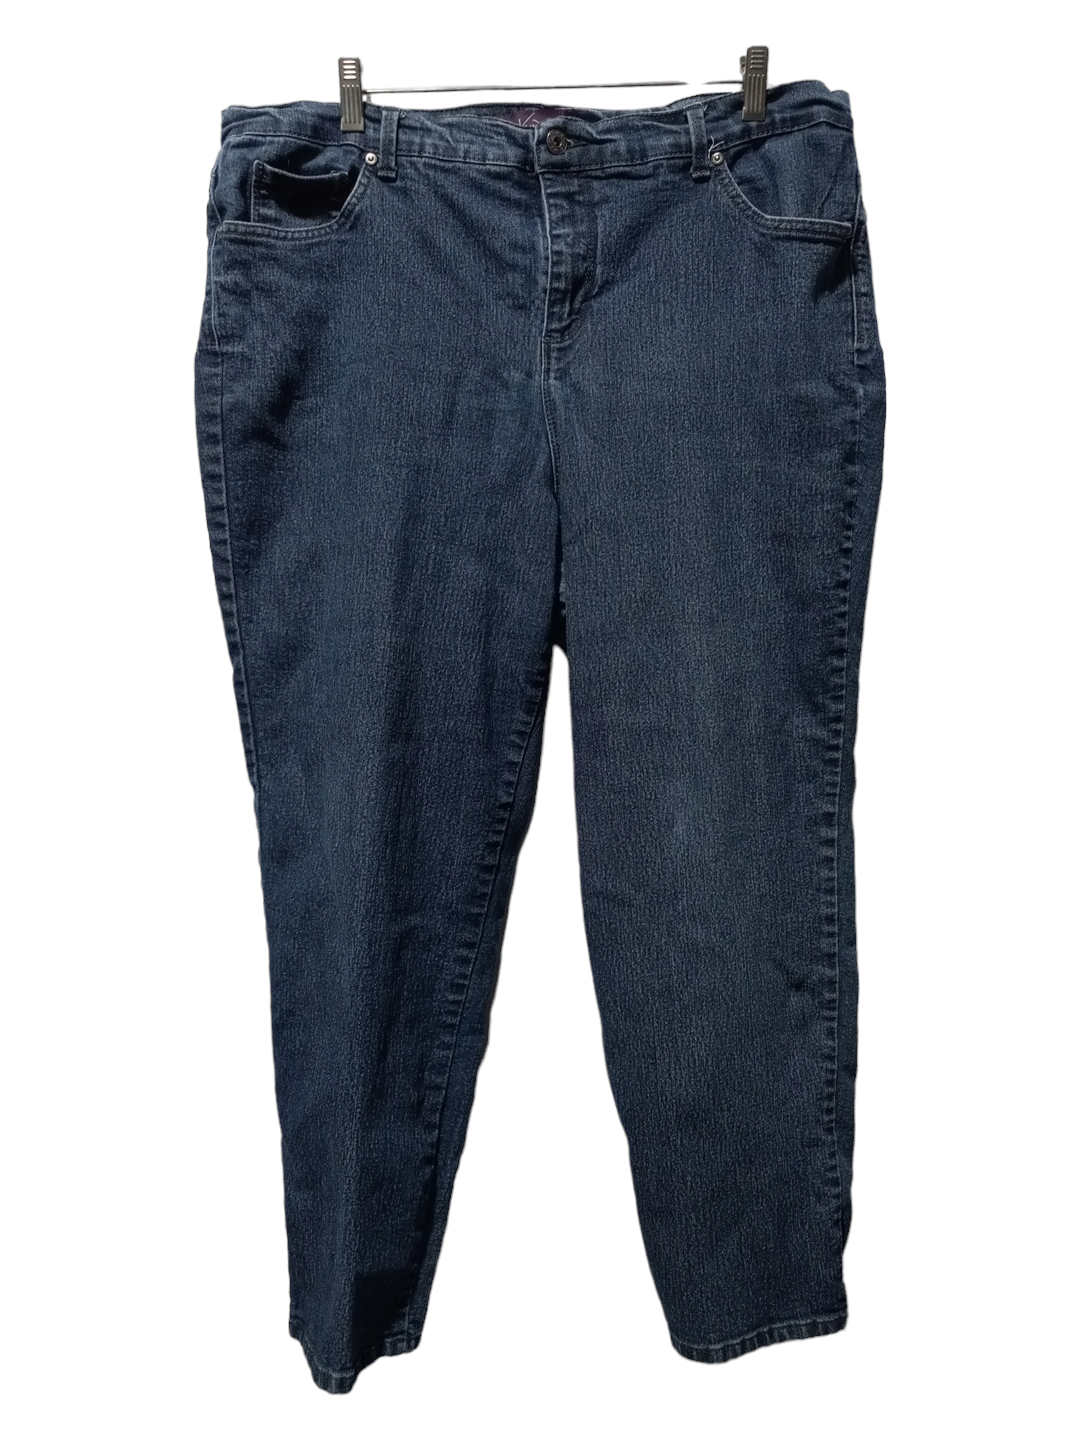 Jeans Straight By Gloria Vanderbilt  Size: 1x